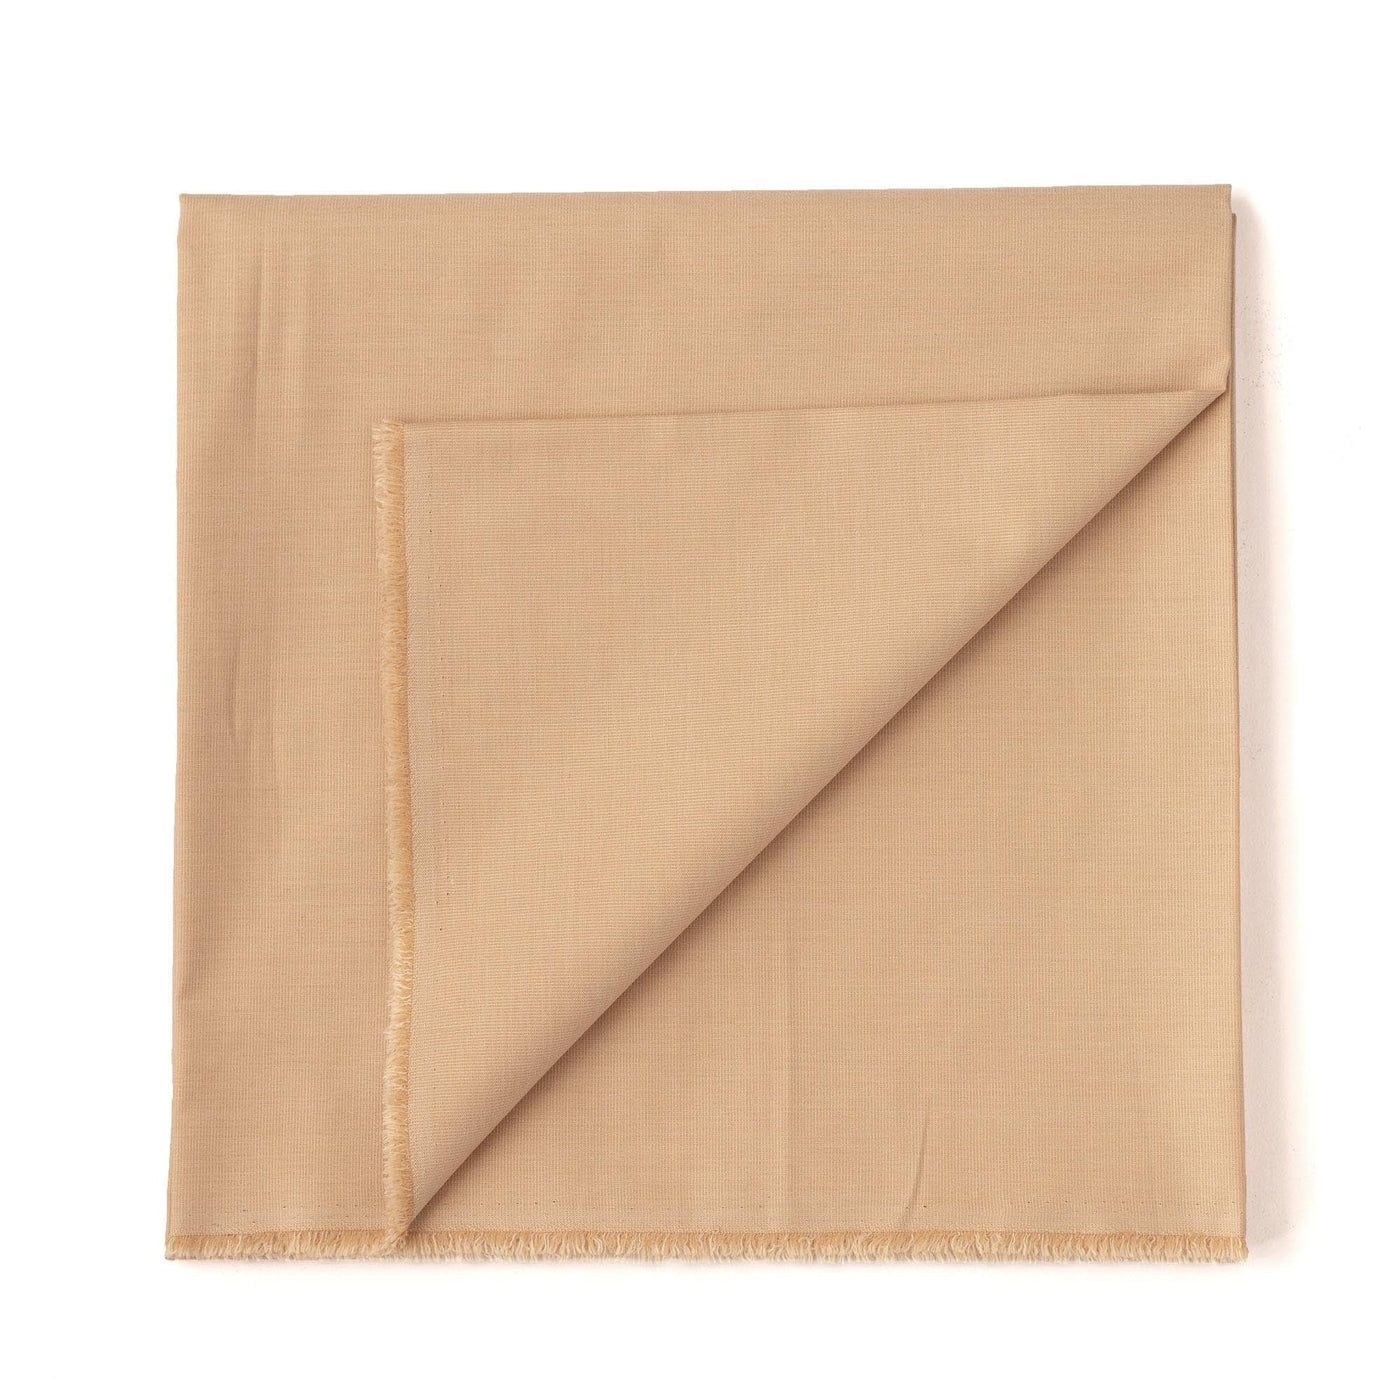 Fabric Pandit Cut Piece (CUT PIECE) Beige Textured Cotton Fabric (Width 58 inch)